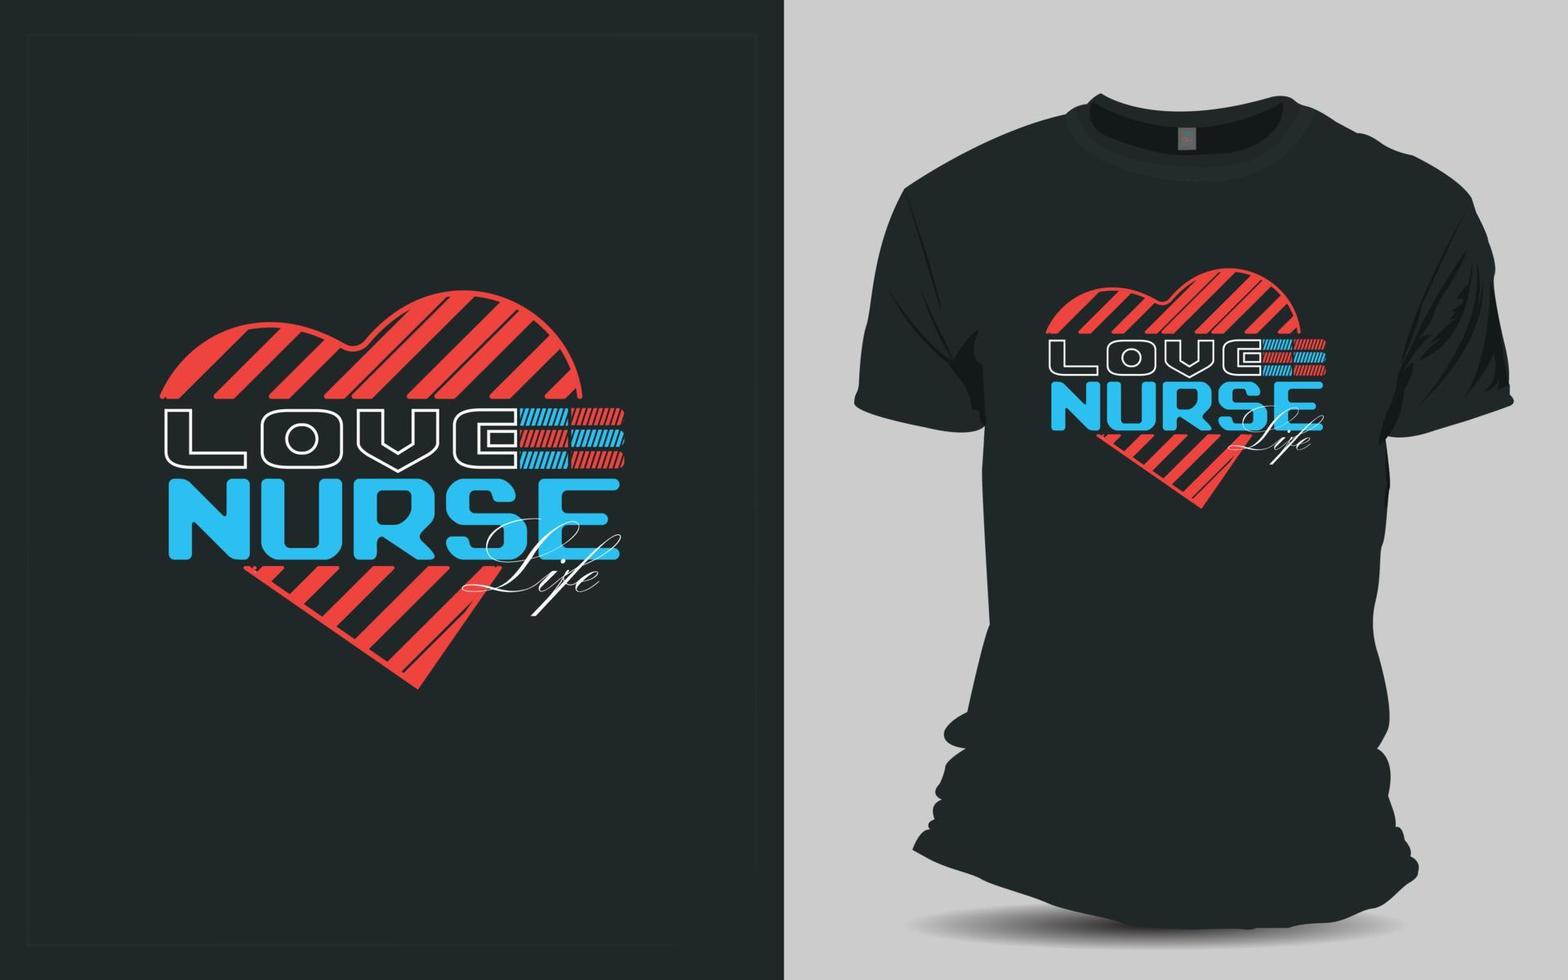 design t-shirt da infermiera vettore